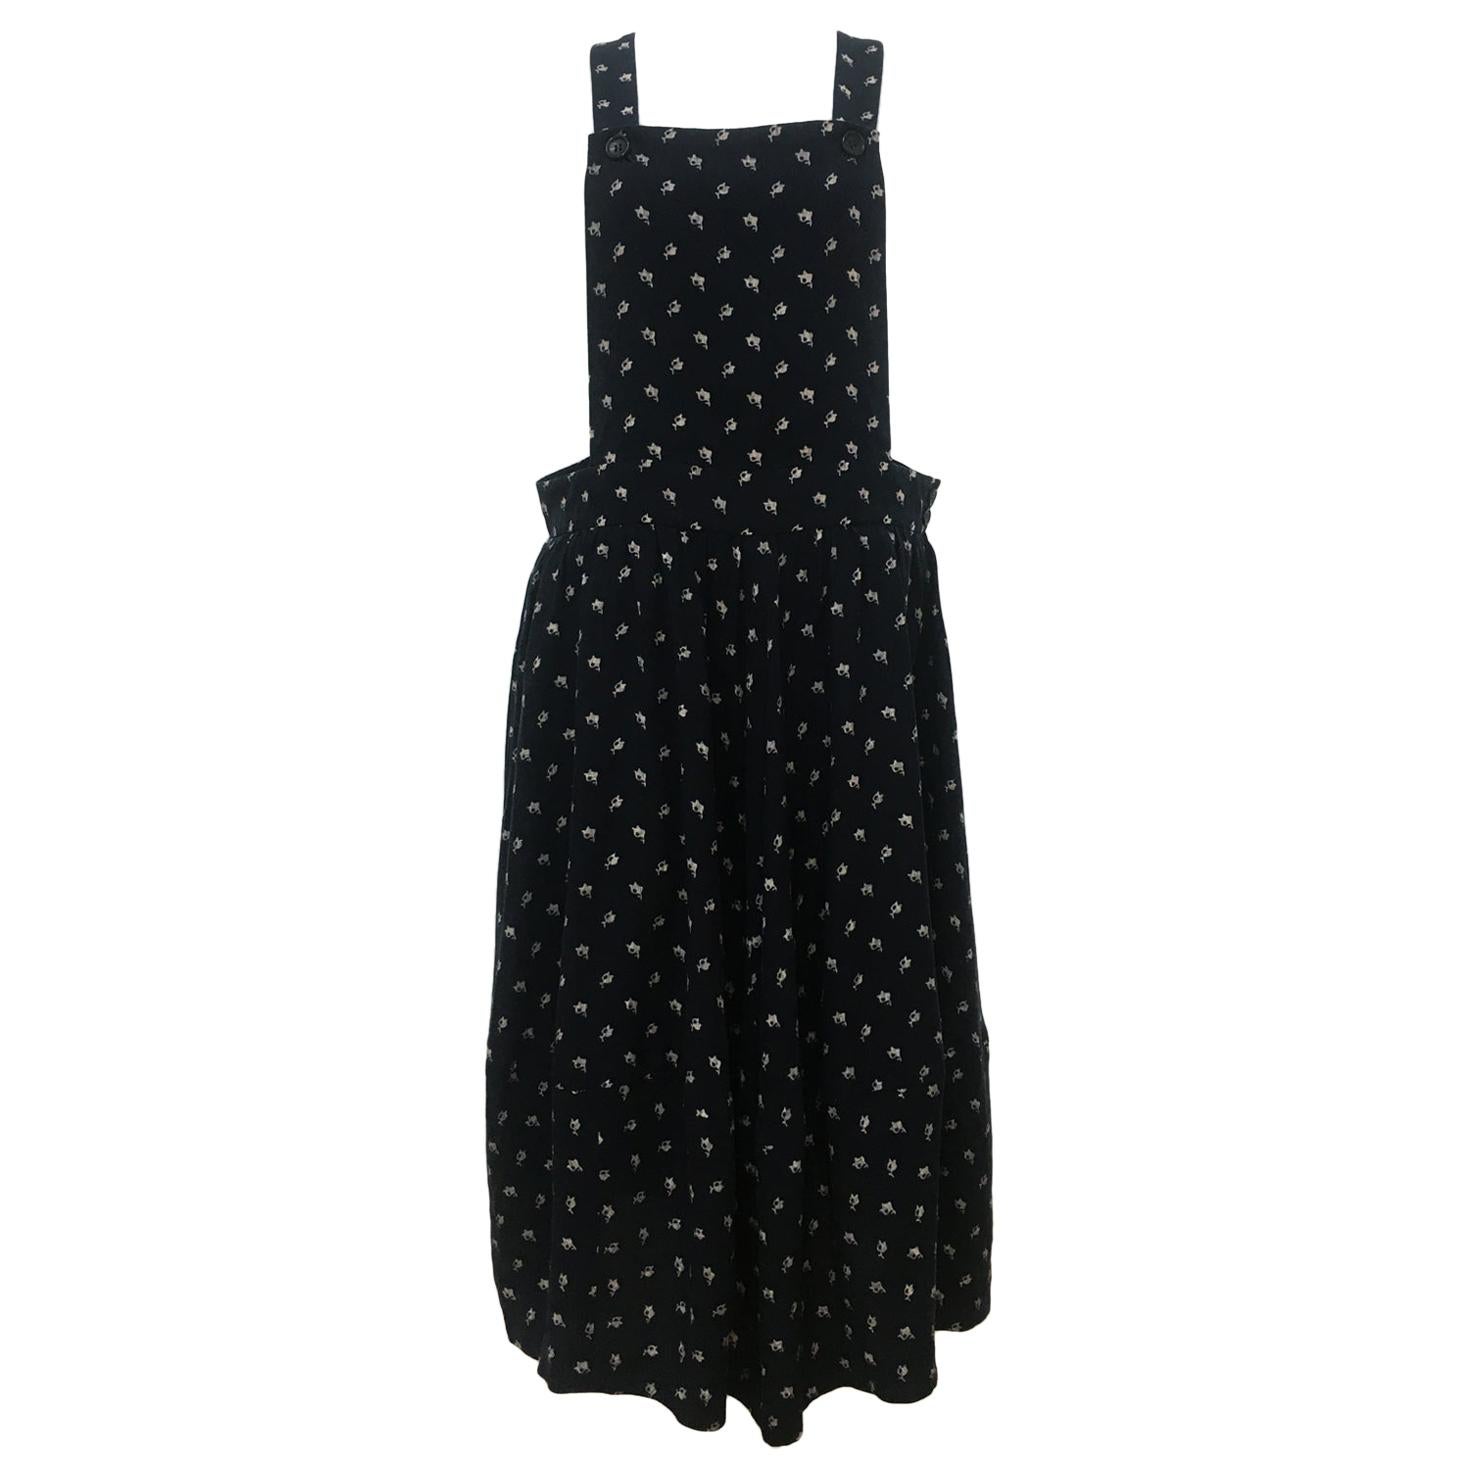 Comme des Garcons Salopette Overall Skirt Dress AD 2013 